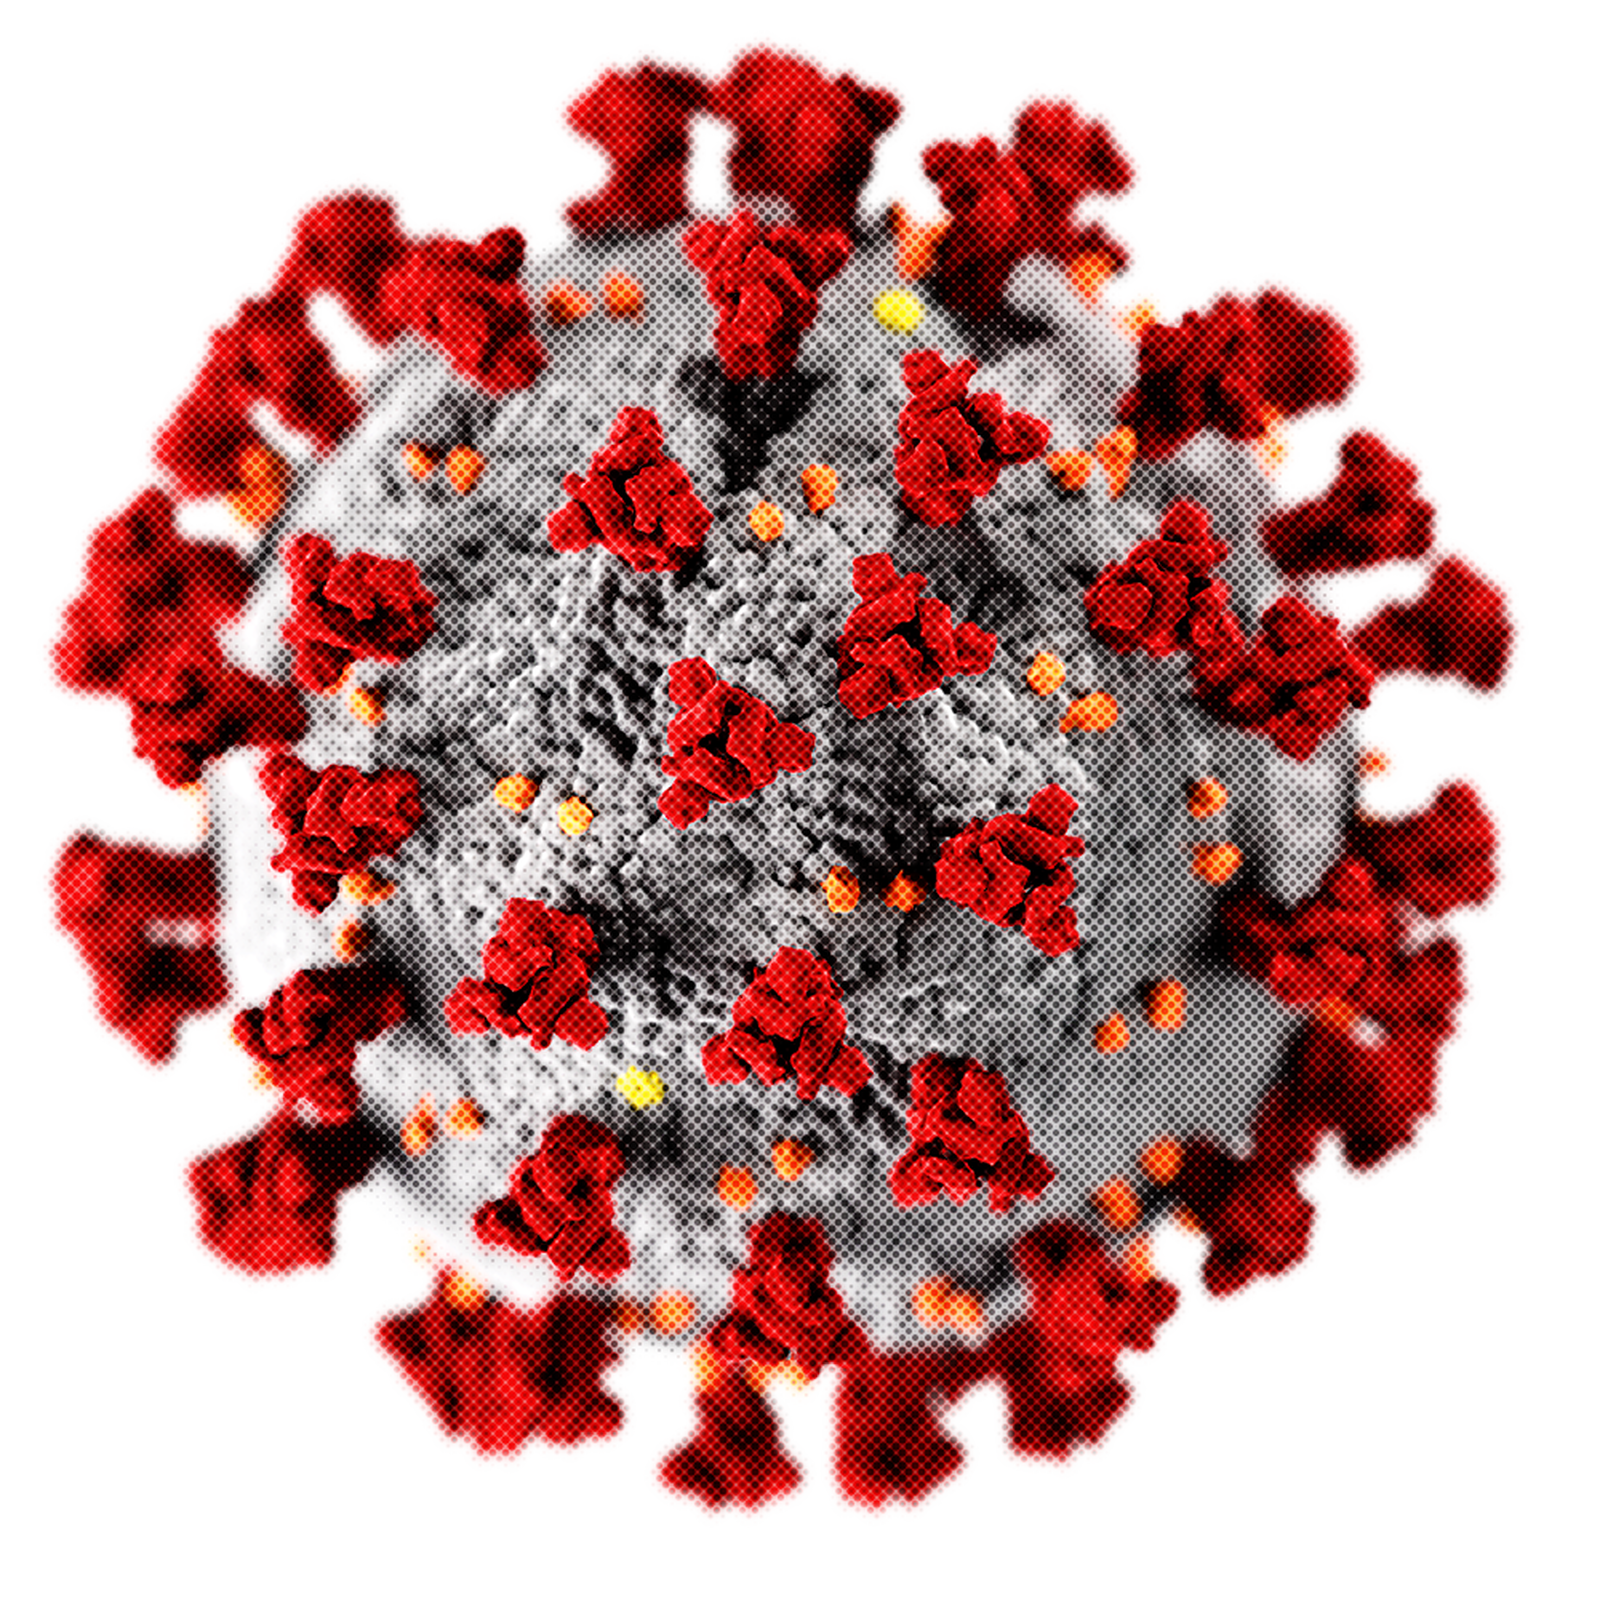 transparent-201920-coronavirus-pandemic-covid-19-testing-co-5f7c24b2a67168.5094043716019713786818